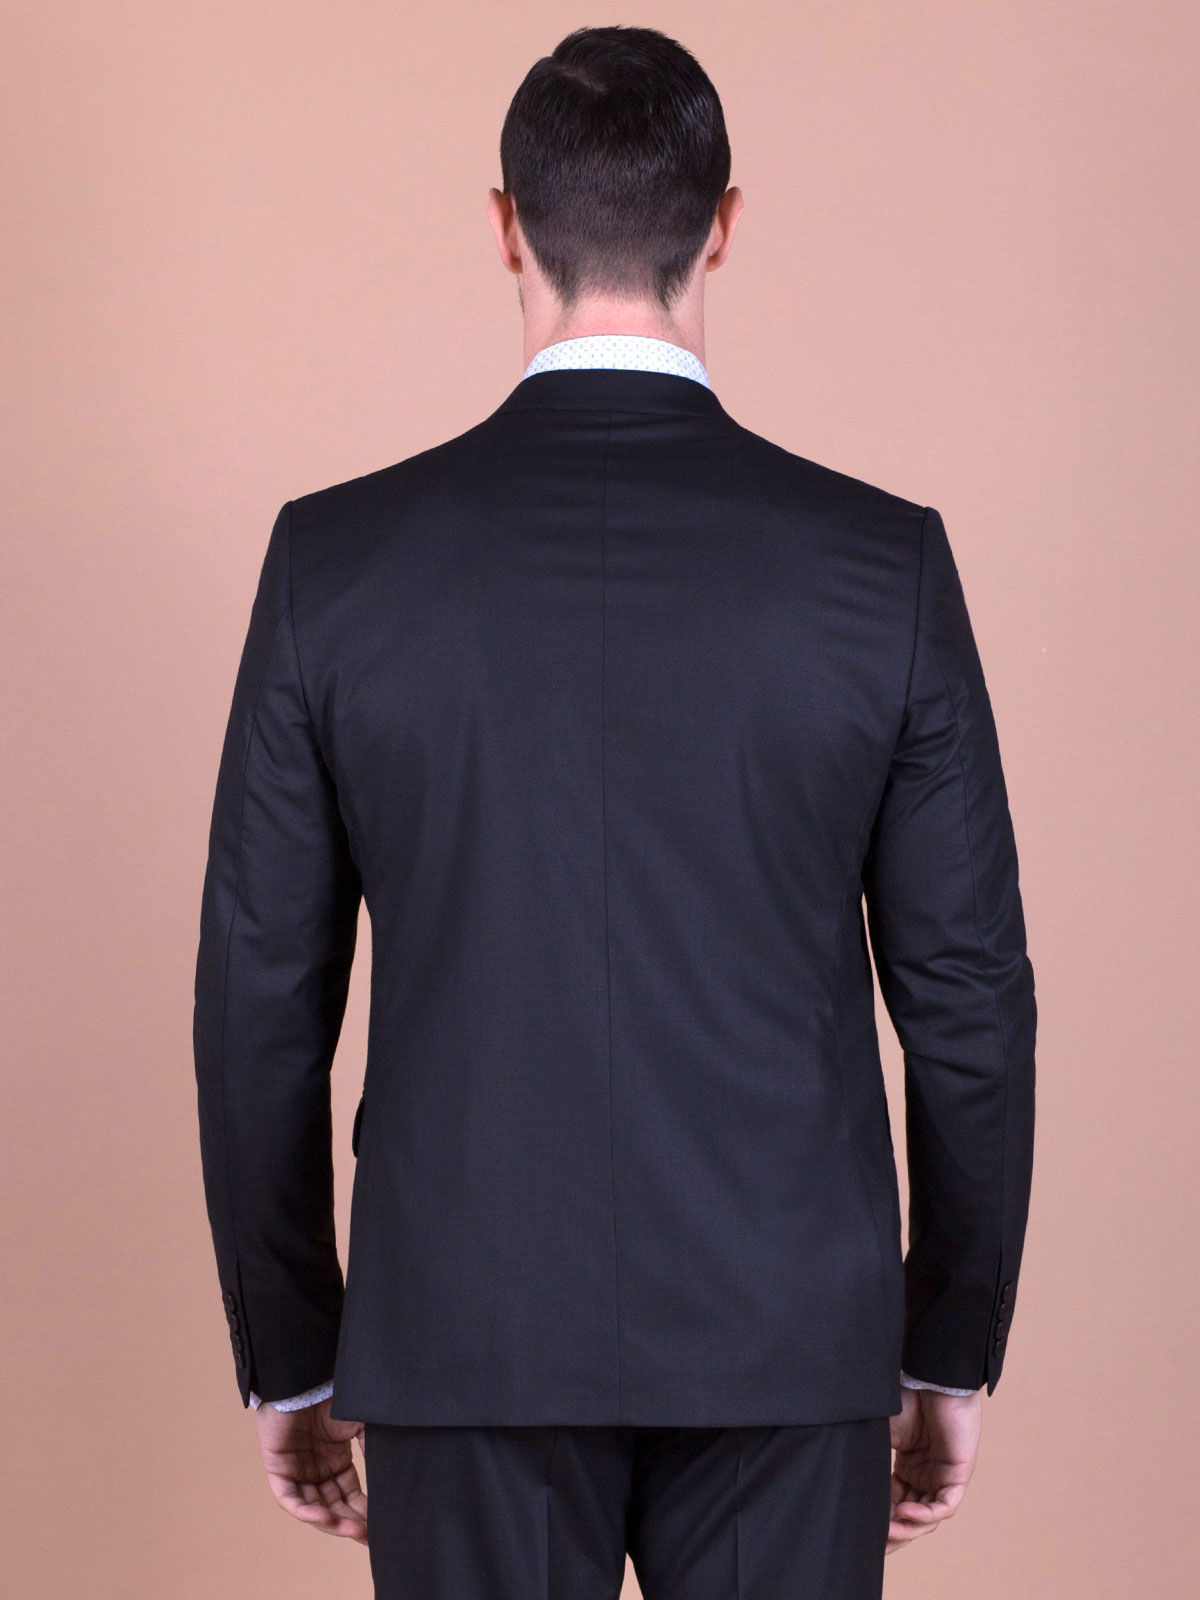 Elegant black jacket made of cotton and - 64061 € 61.30 img3